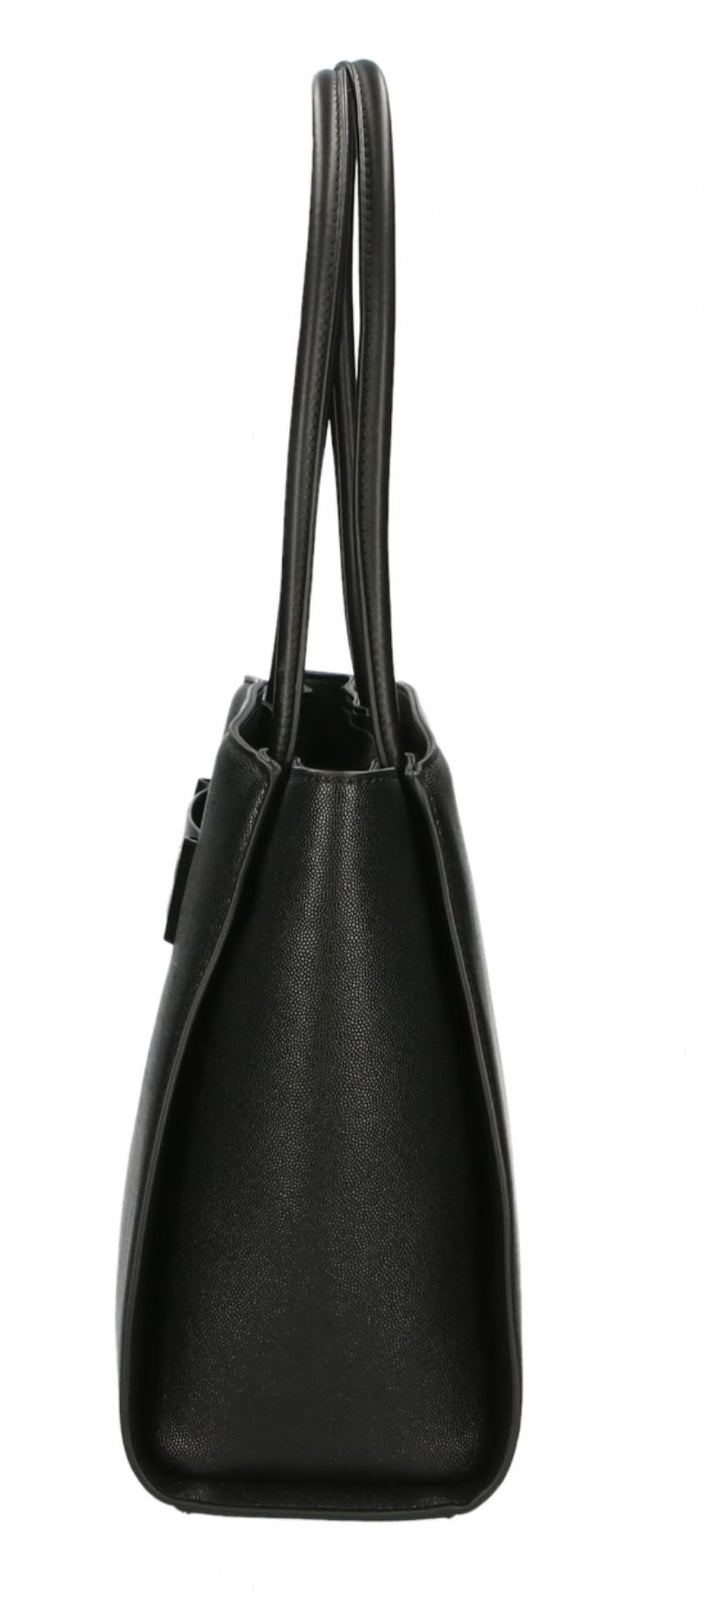 Plein Sport Black Polyethylene Handbag